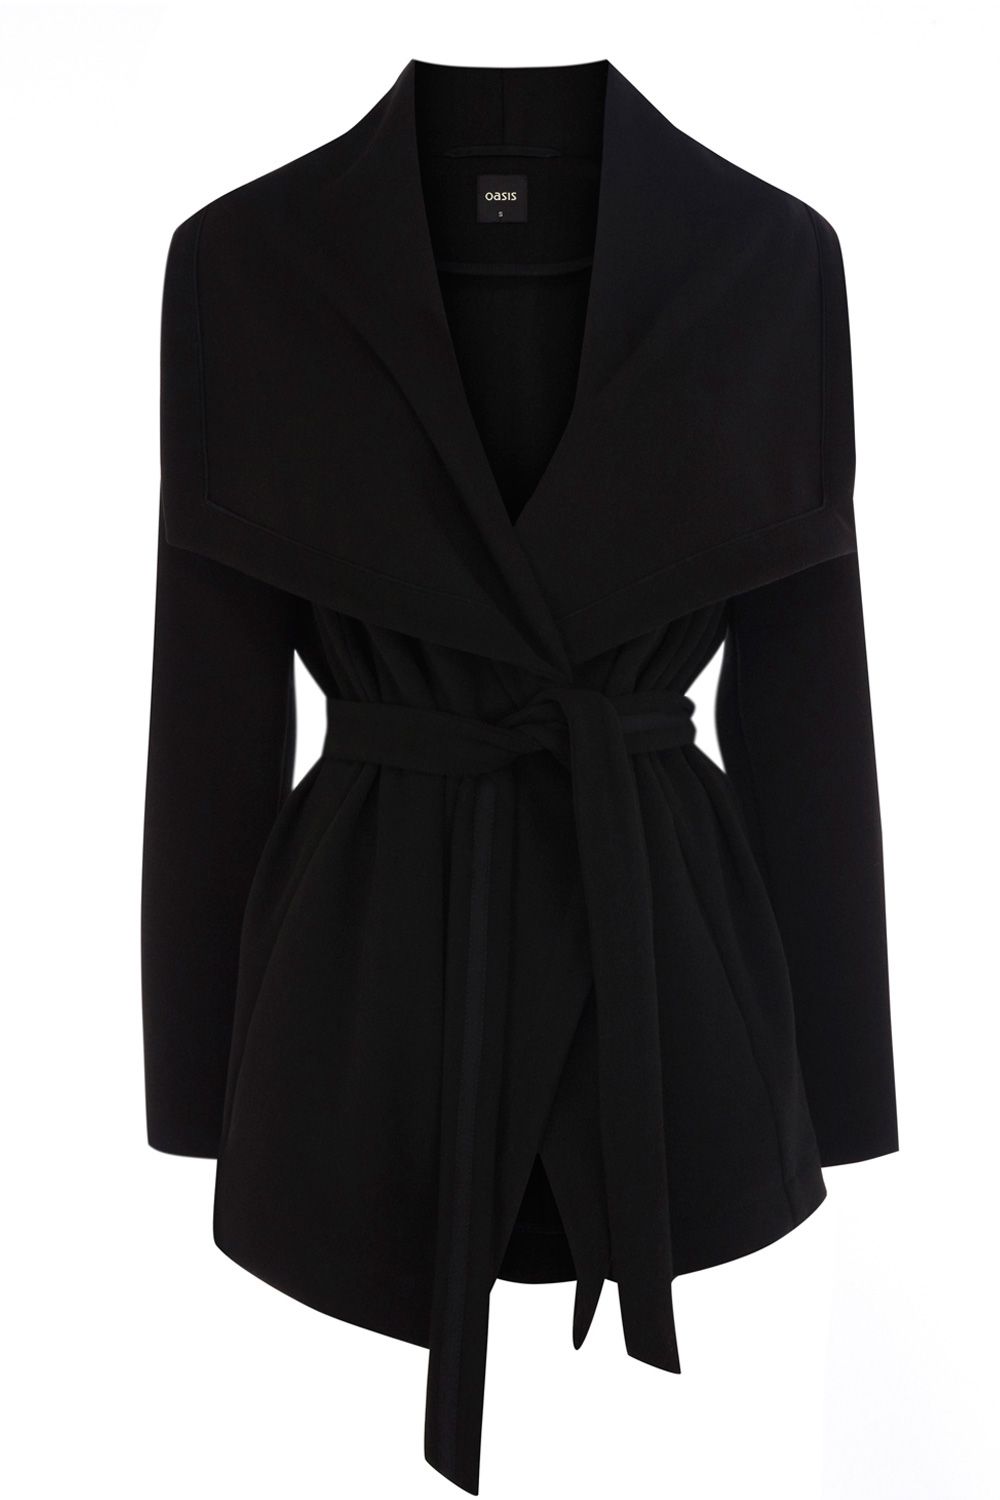 Oasis Short Drape Coat in Black | Lyst